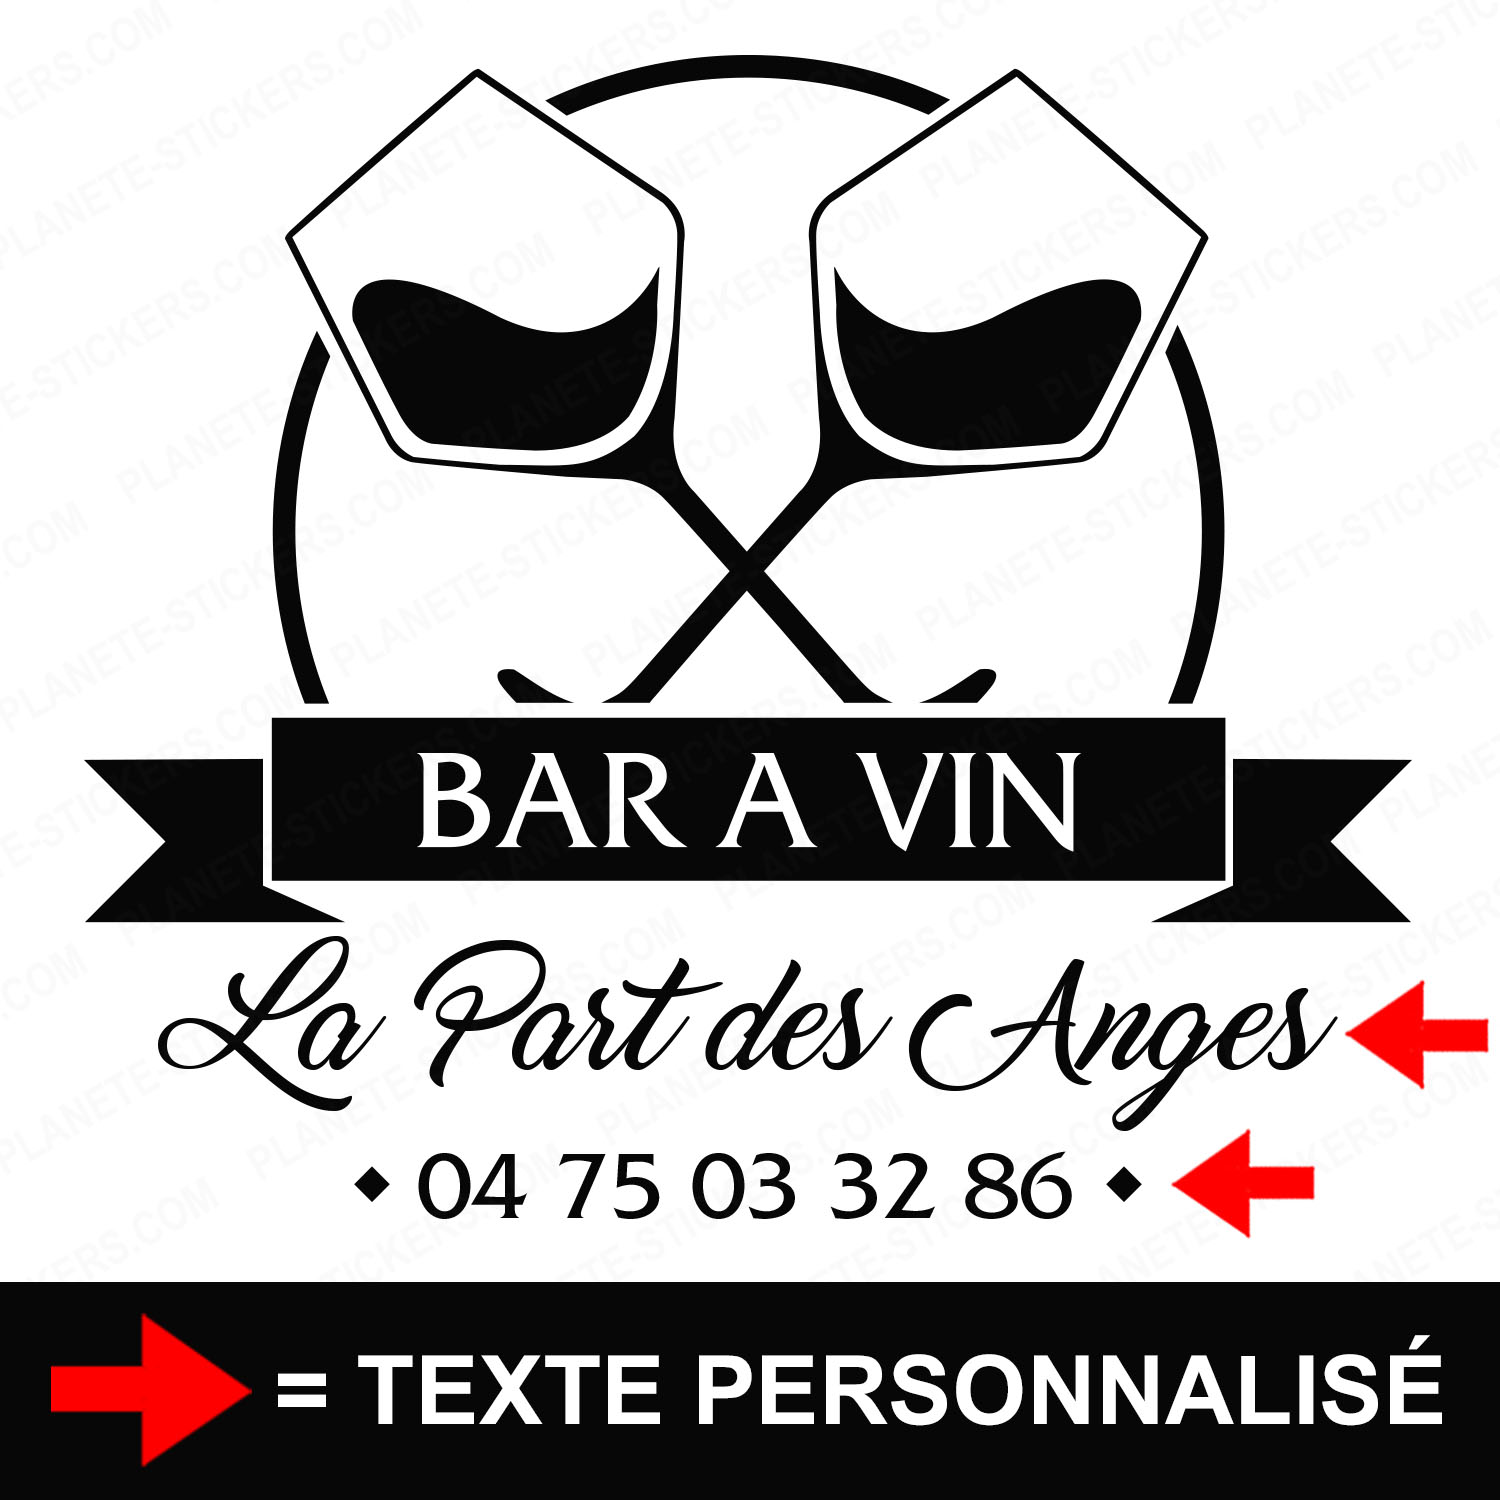 ref13baravinvitrine-stickers-bar-à-vin-vitrine-restaurant-sticker-bar-a-vins-vitrophanie-personnalisé-autocollant-pro-restaurateur-vitre-resto-logo-verres-vin-2